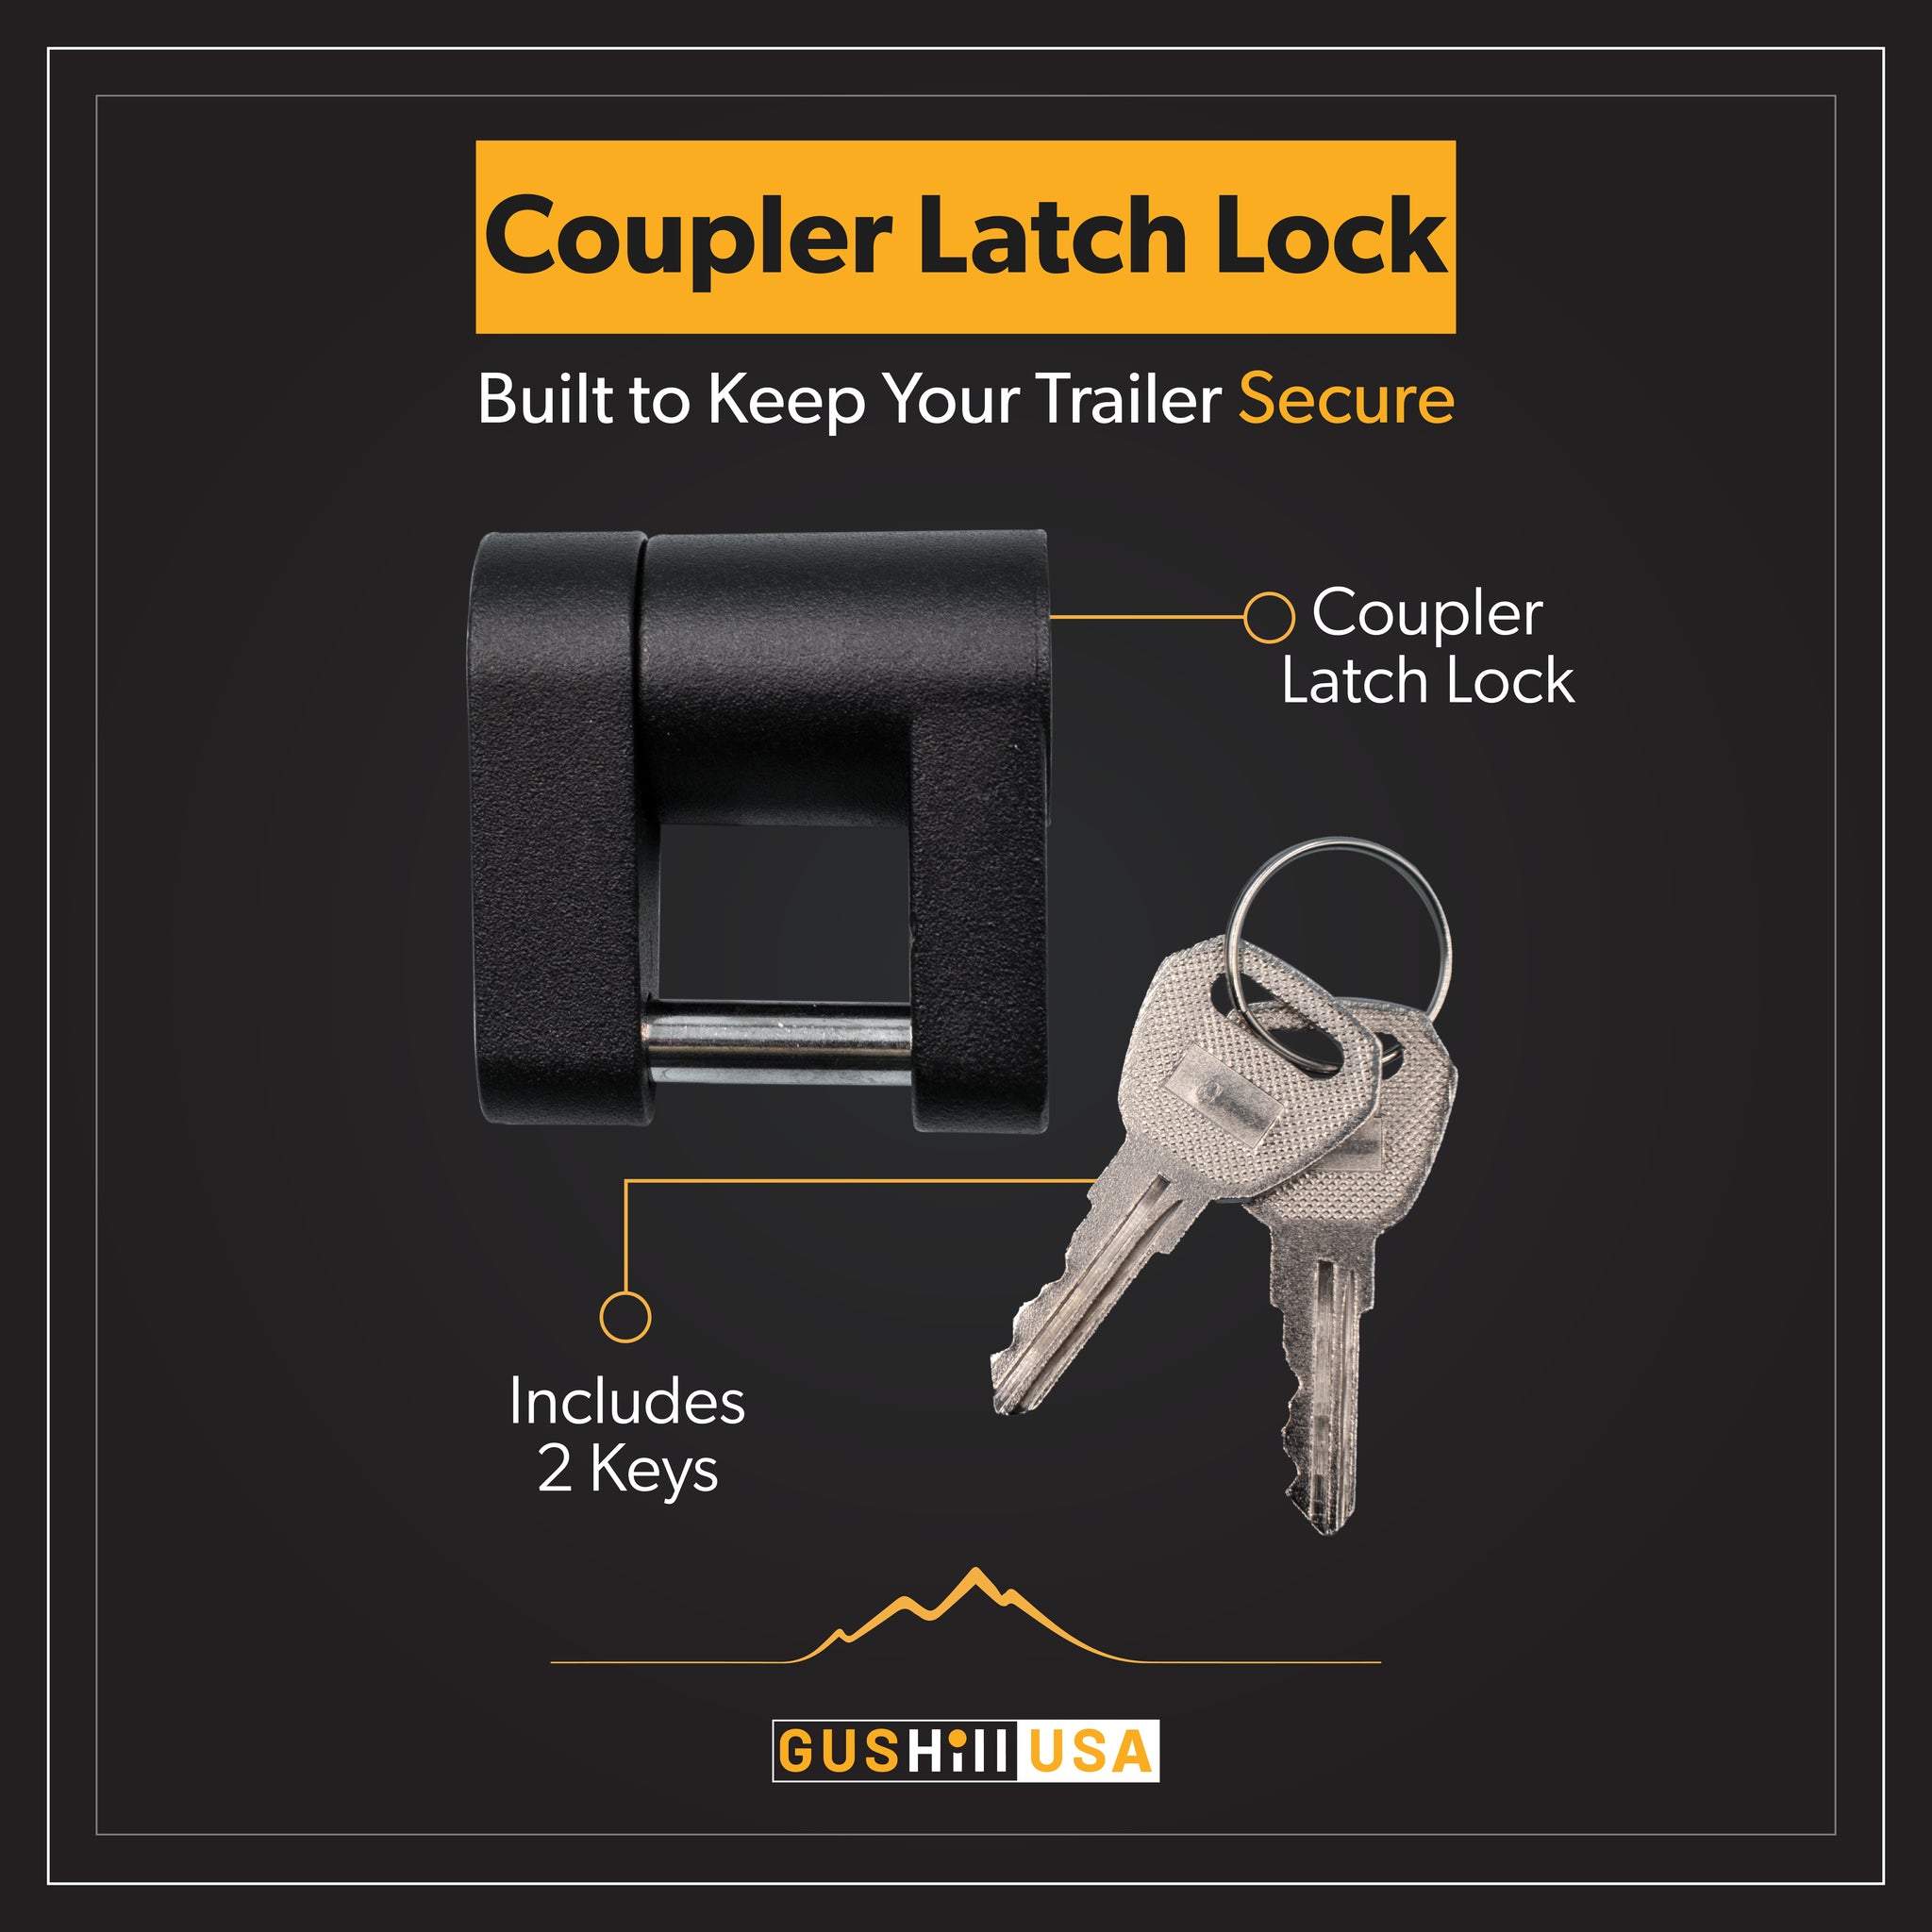 Coupler Latch Lock